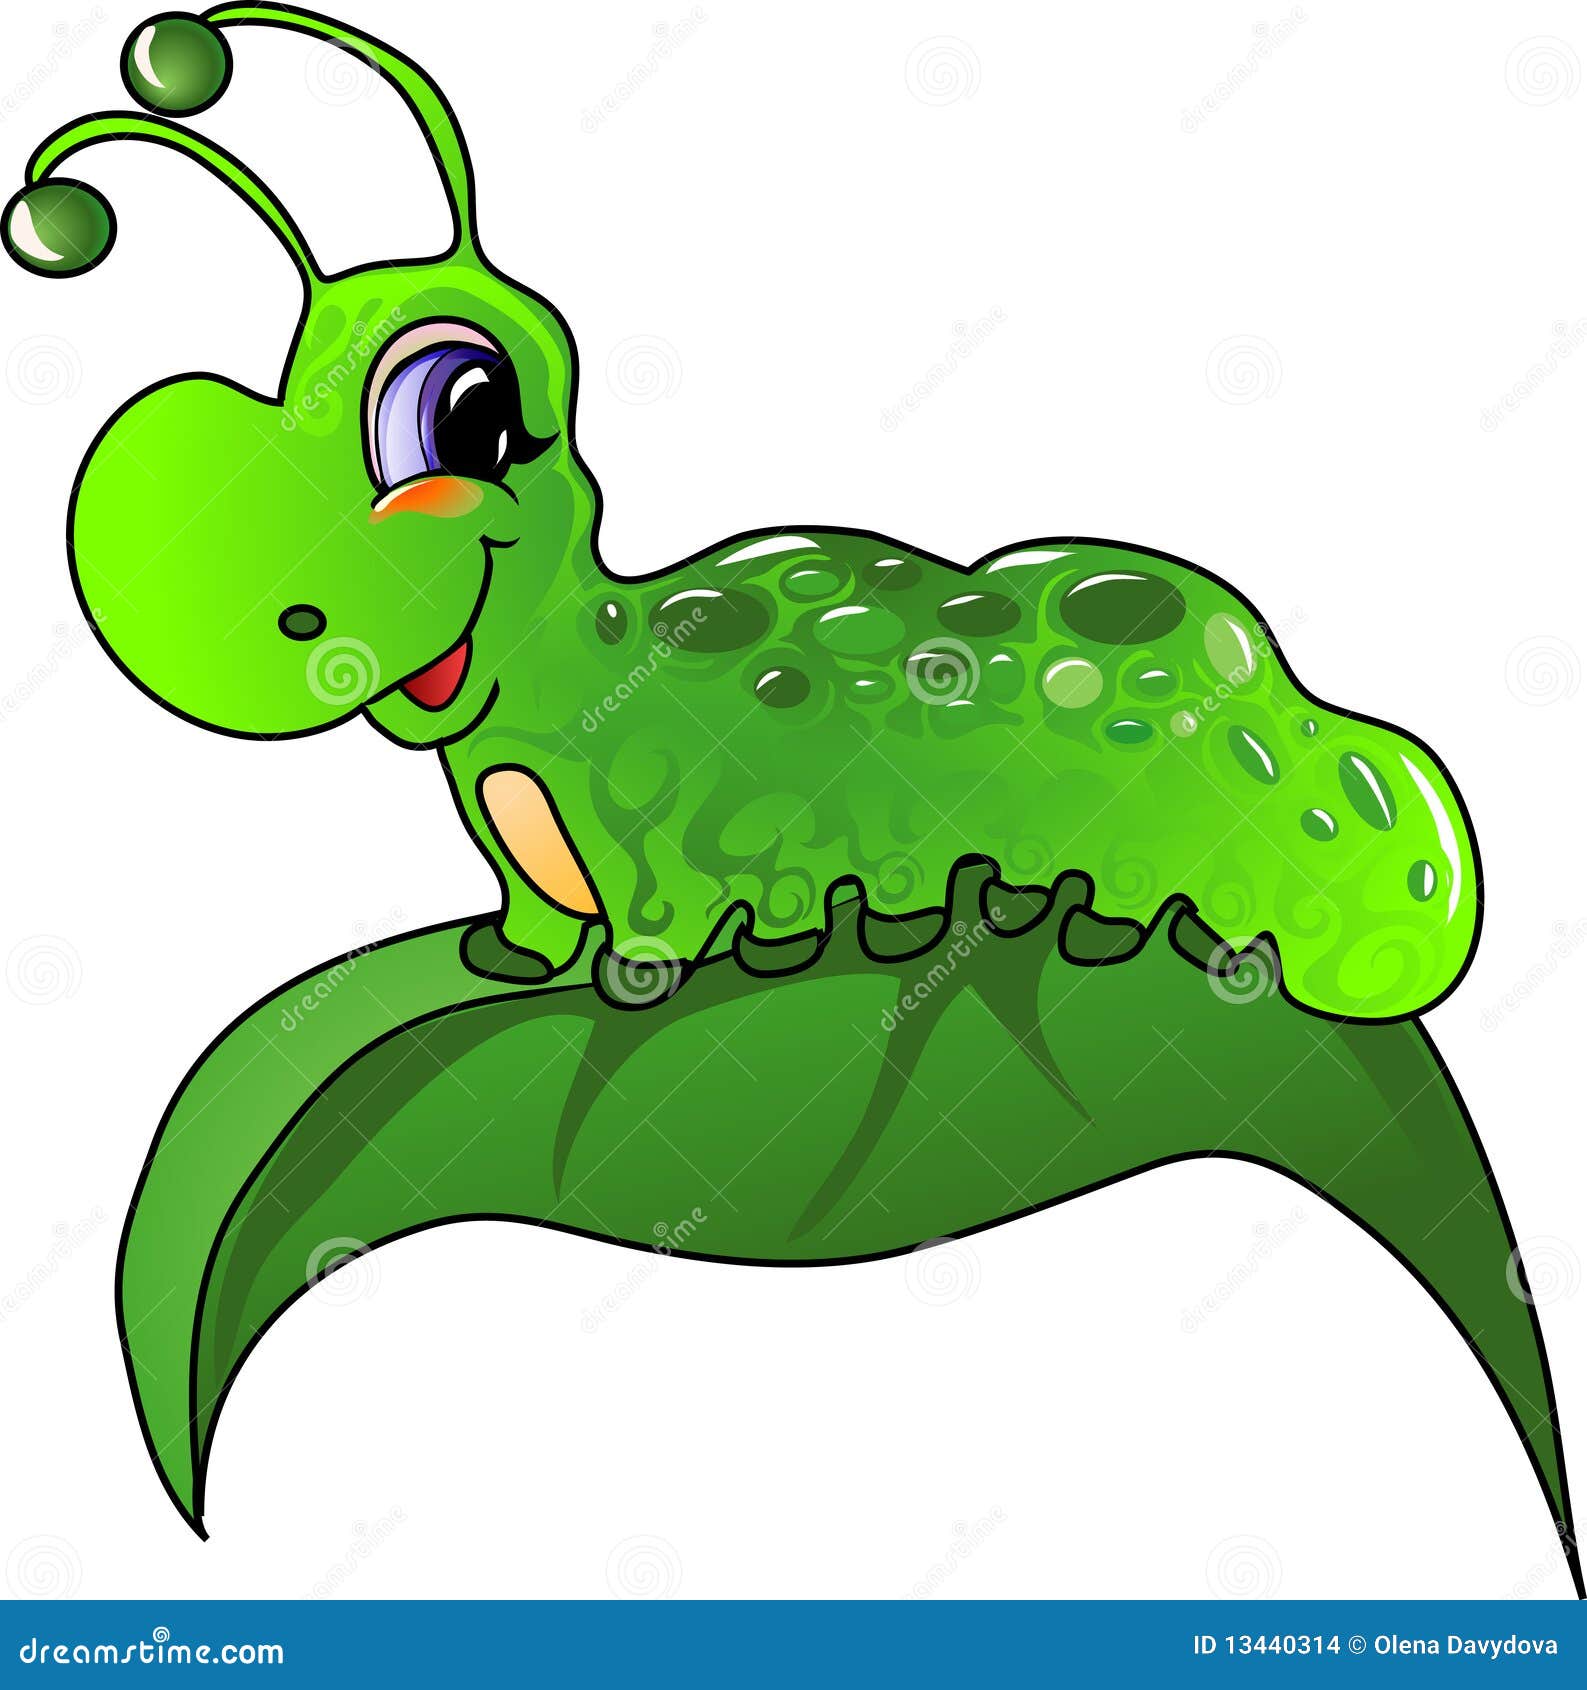 Cartoon caterpillar stock illustration. Image of green - 13440314